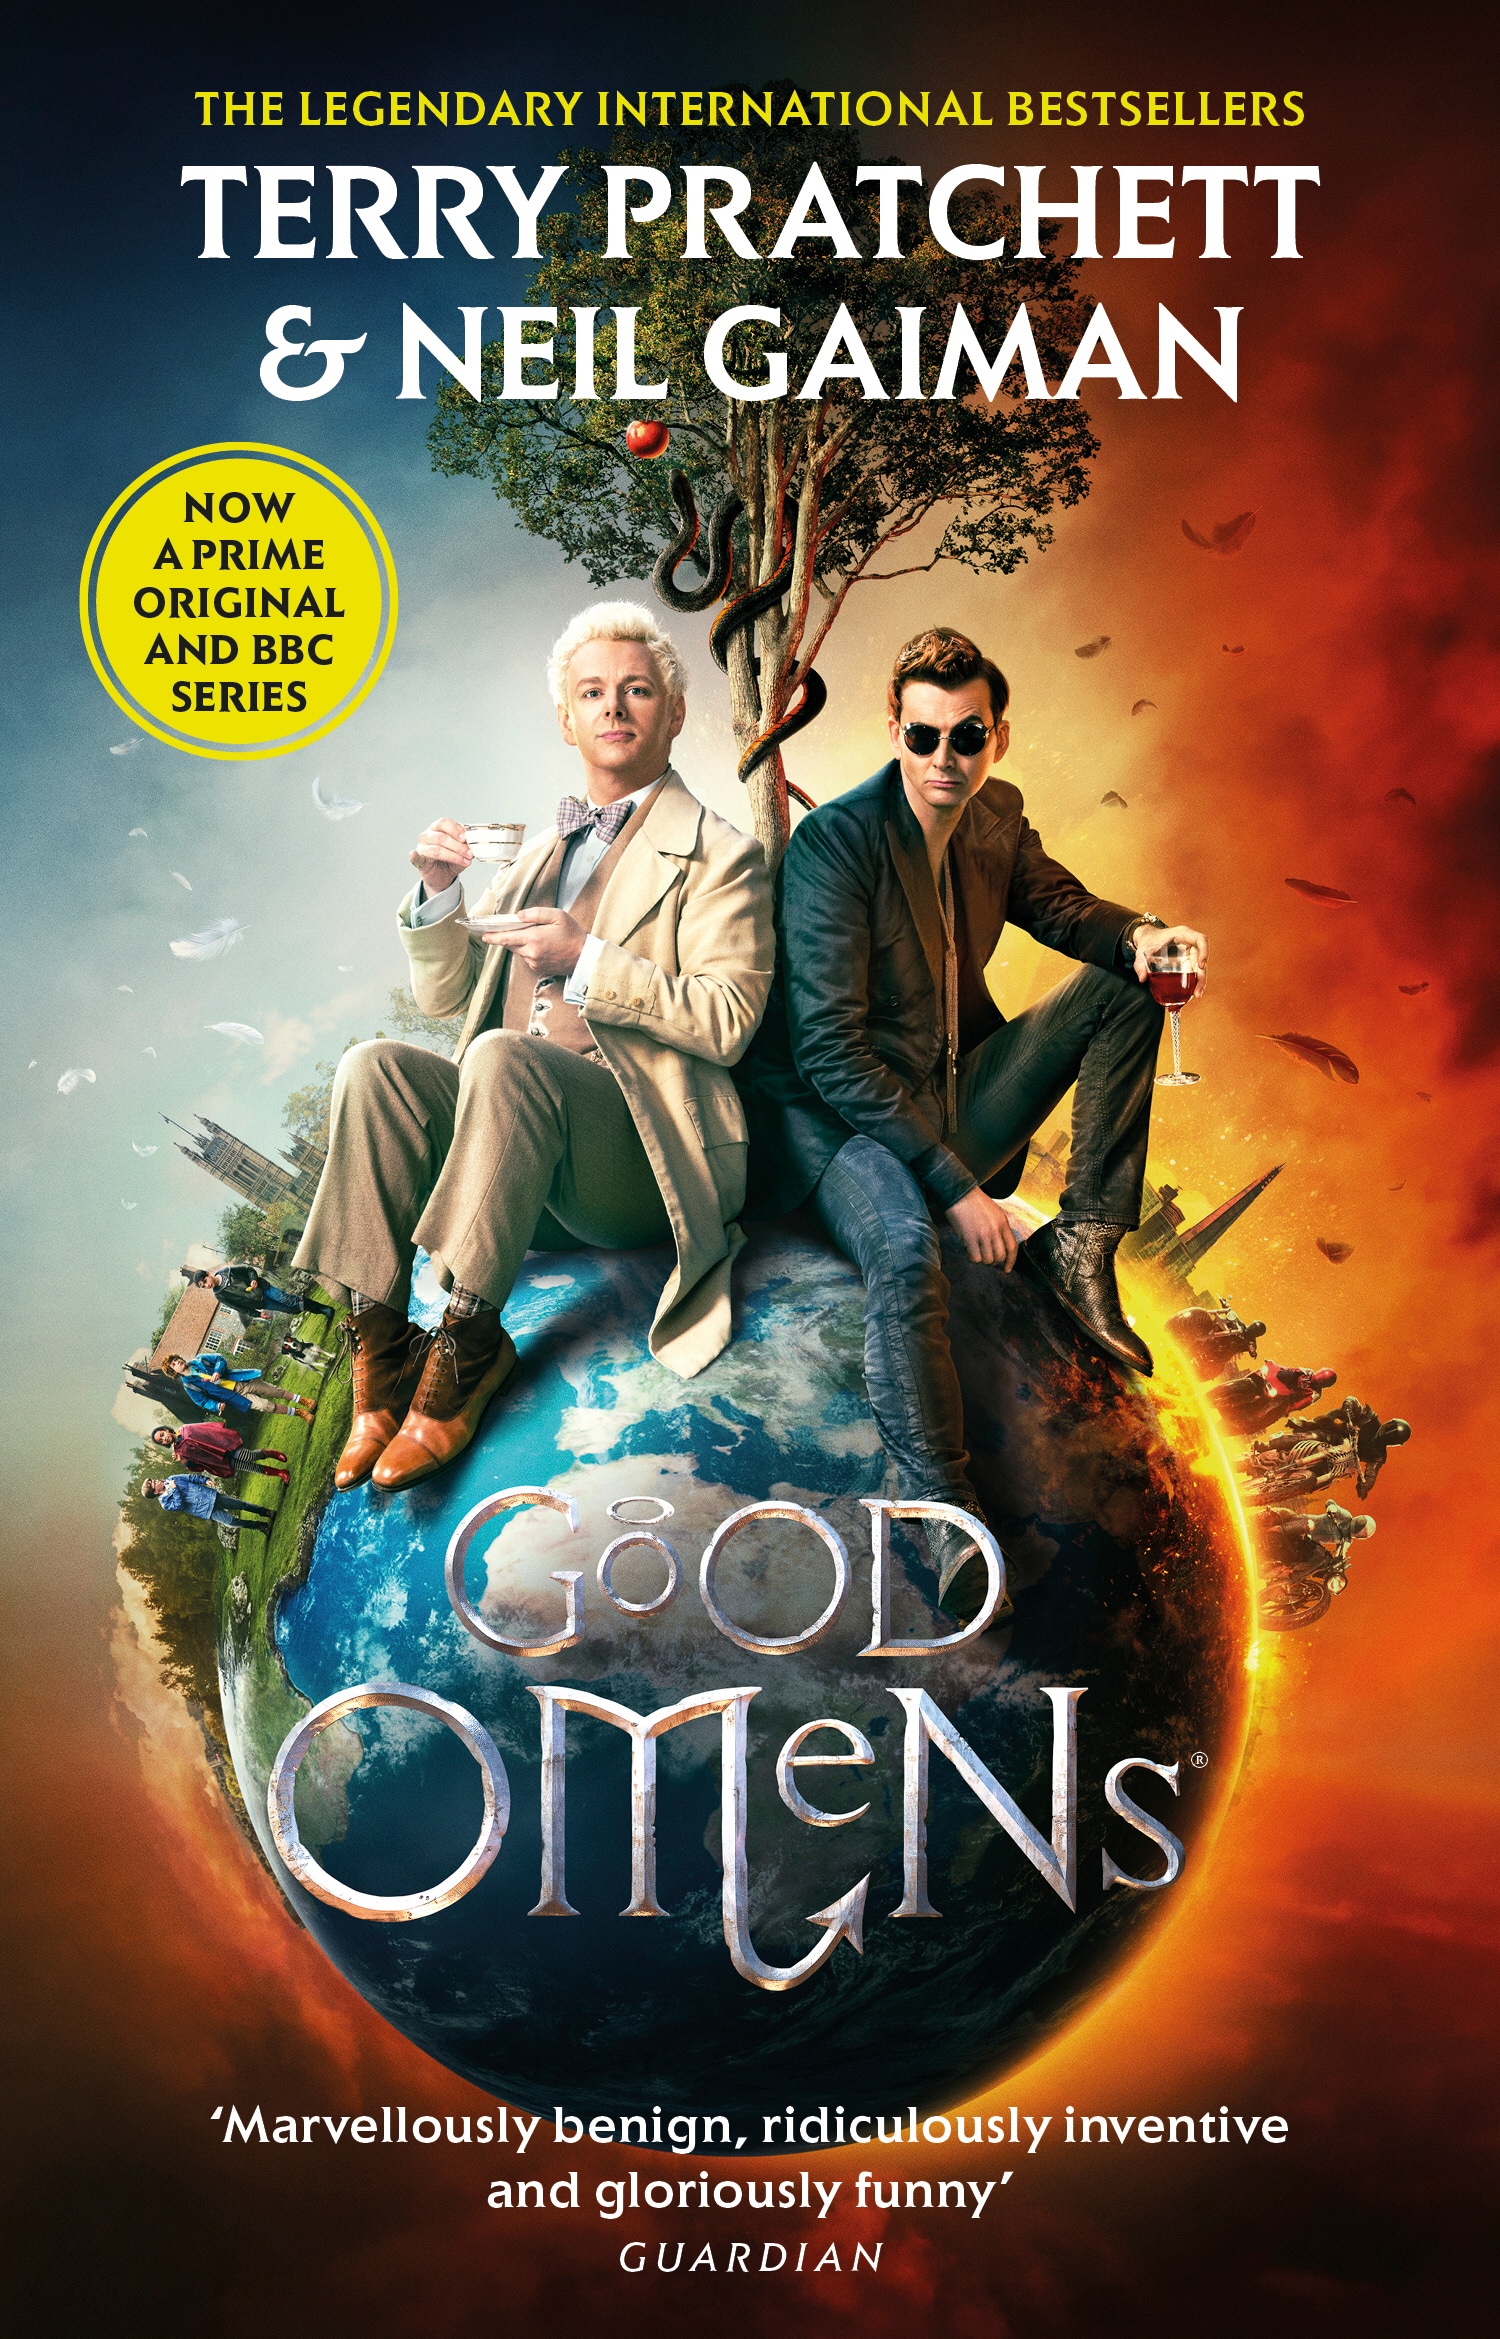 Book “Good Omens” by Neil Gaiman, Terry Pratchett — May 2, 2019